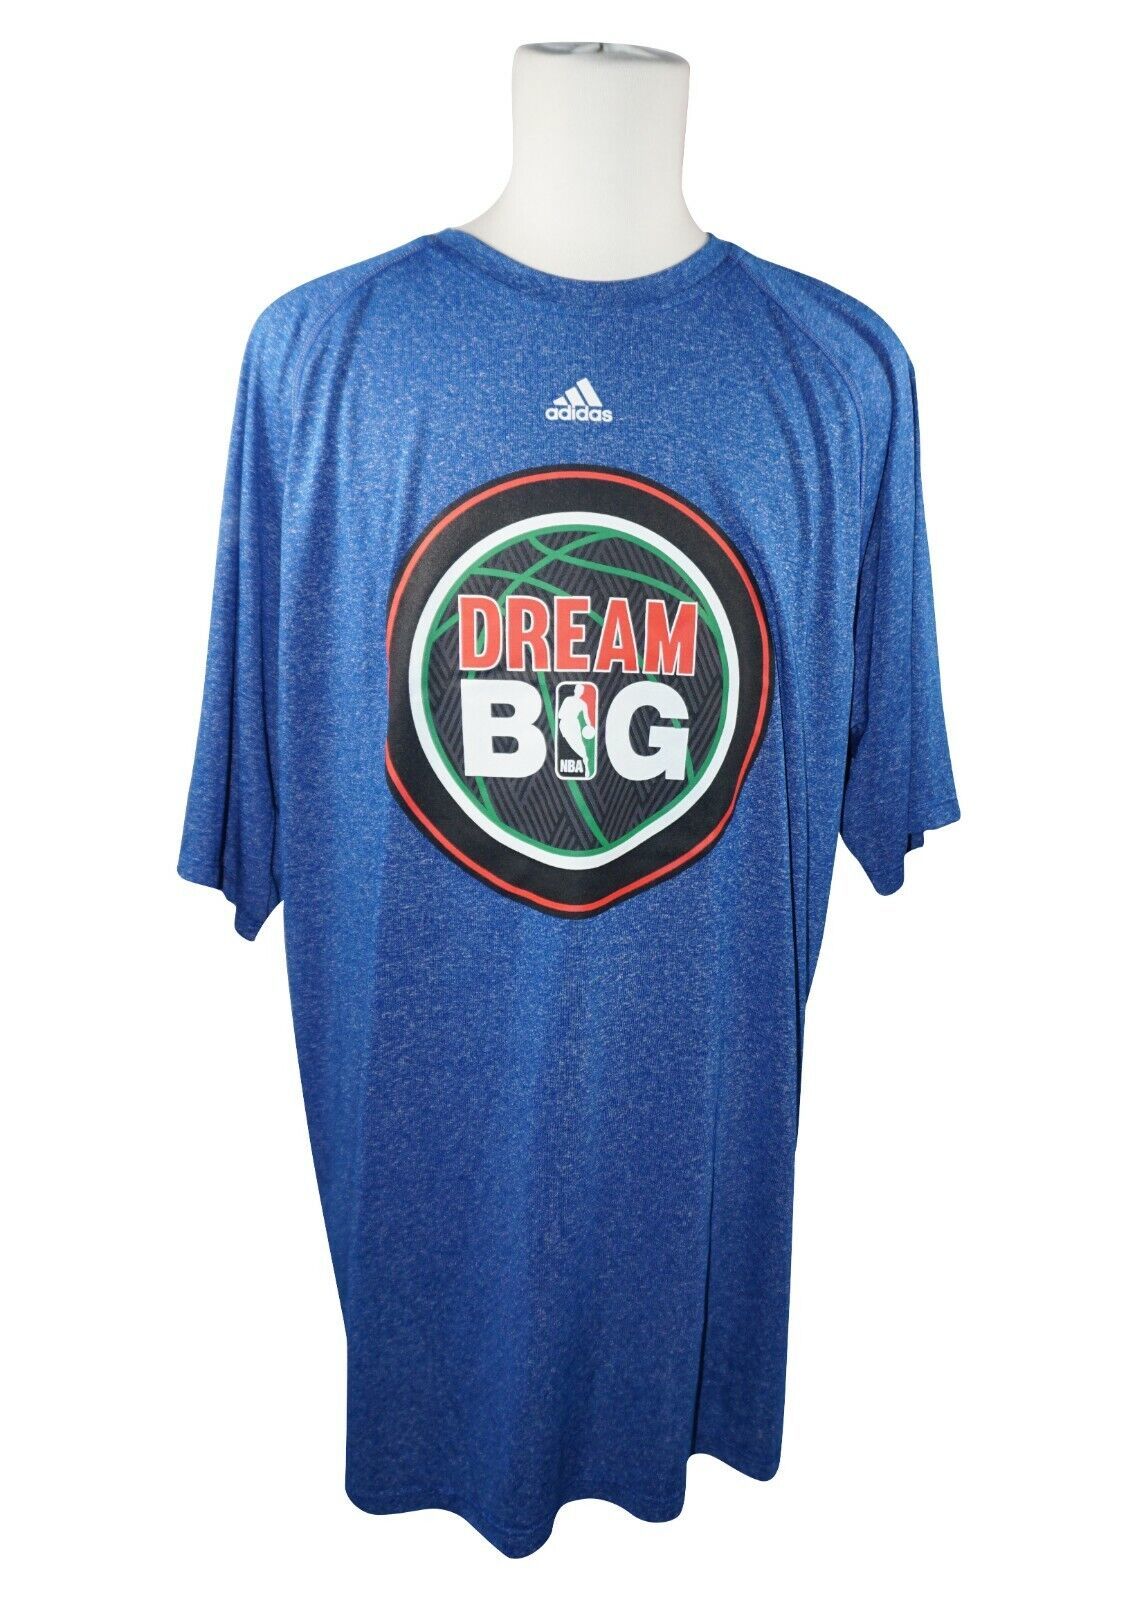 Vintage NBA Dream Big Adidas Basketball Shirt XLT - Navy Blue Wash T-shirt 2014 - $30.00